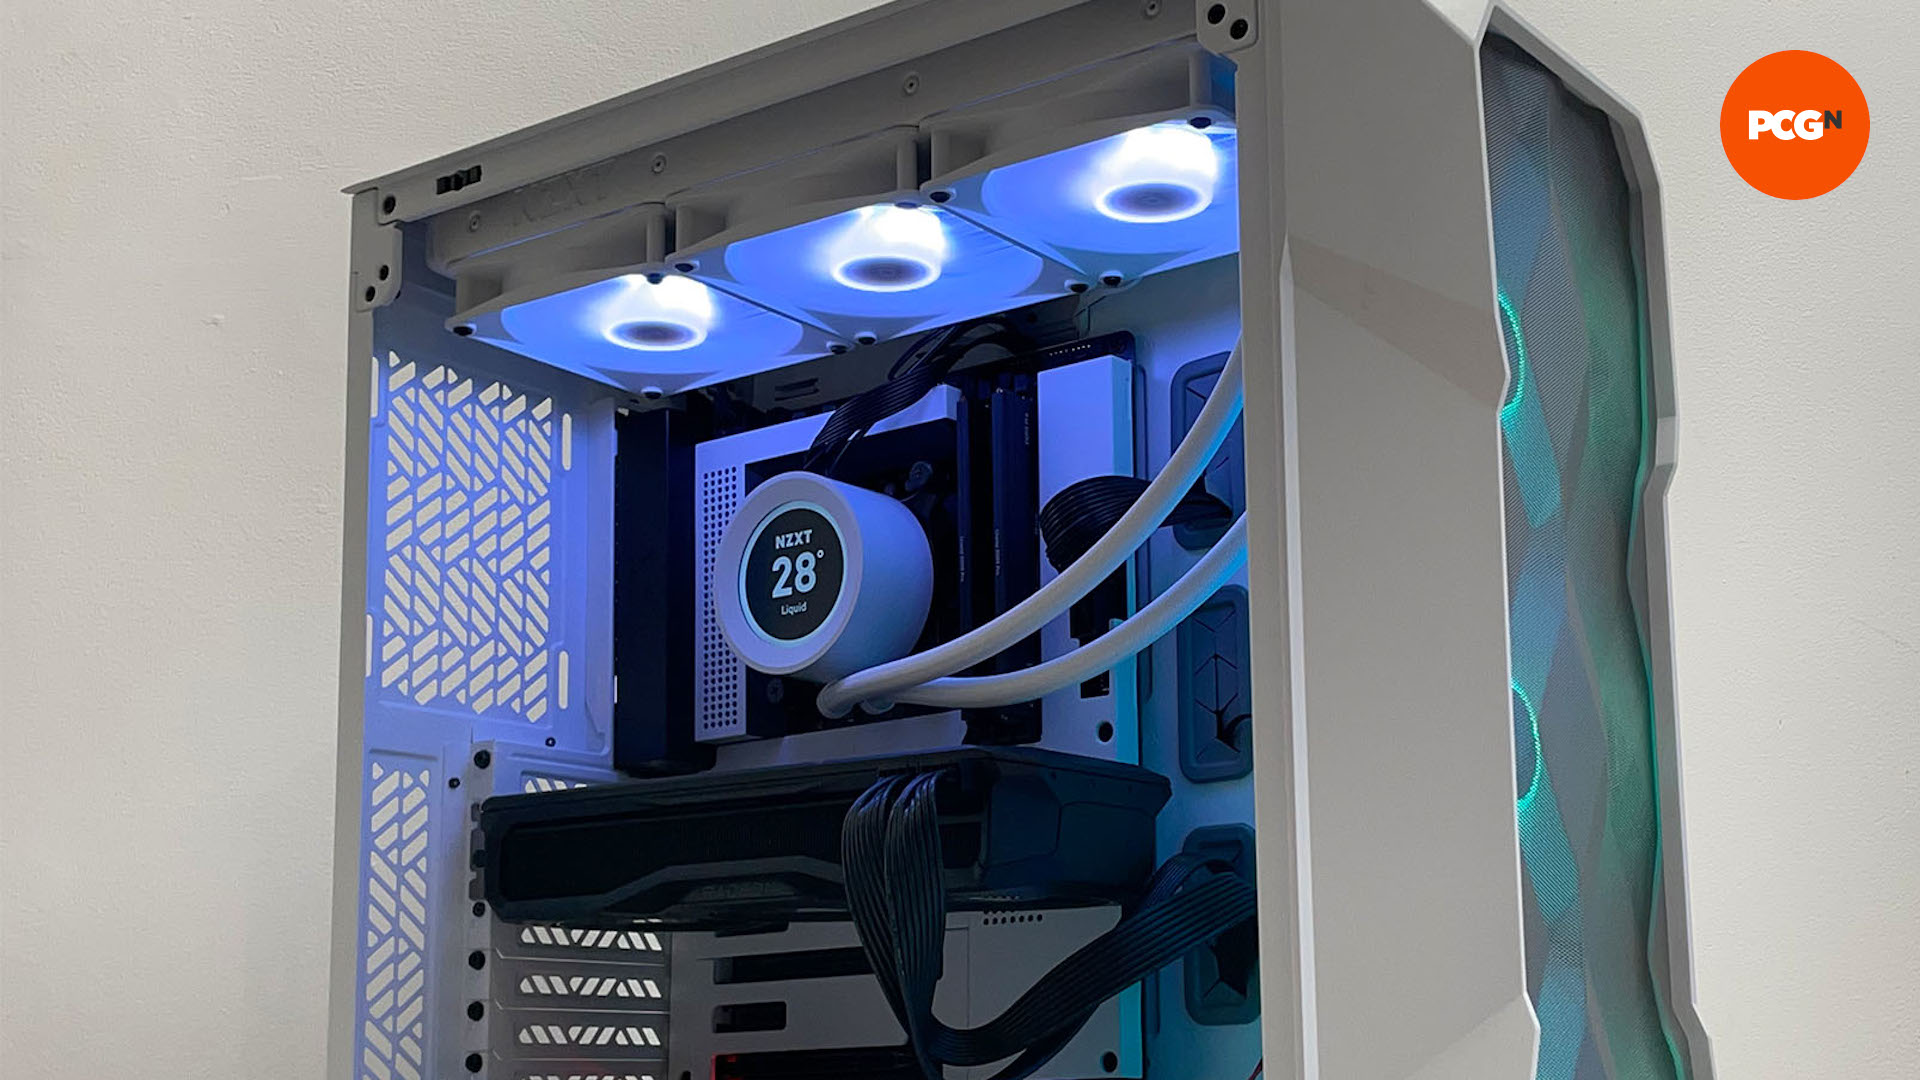 NZXT Kraken Elite 360 RGB installed in a white case above the GPU